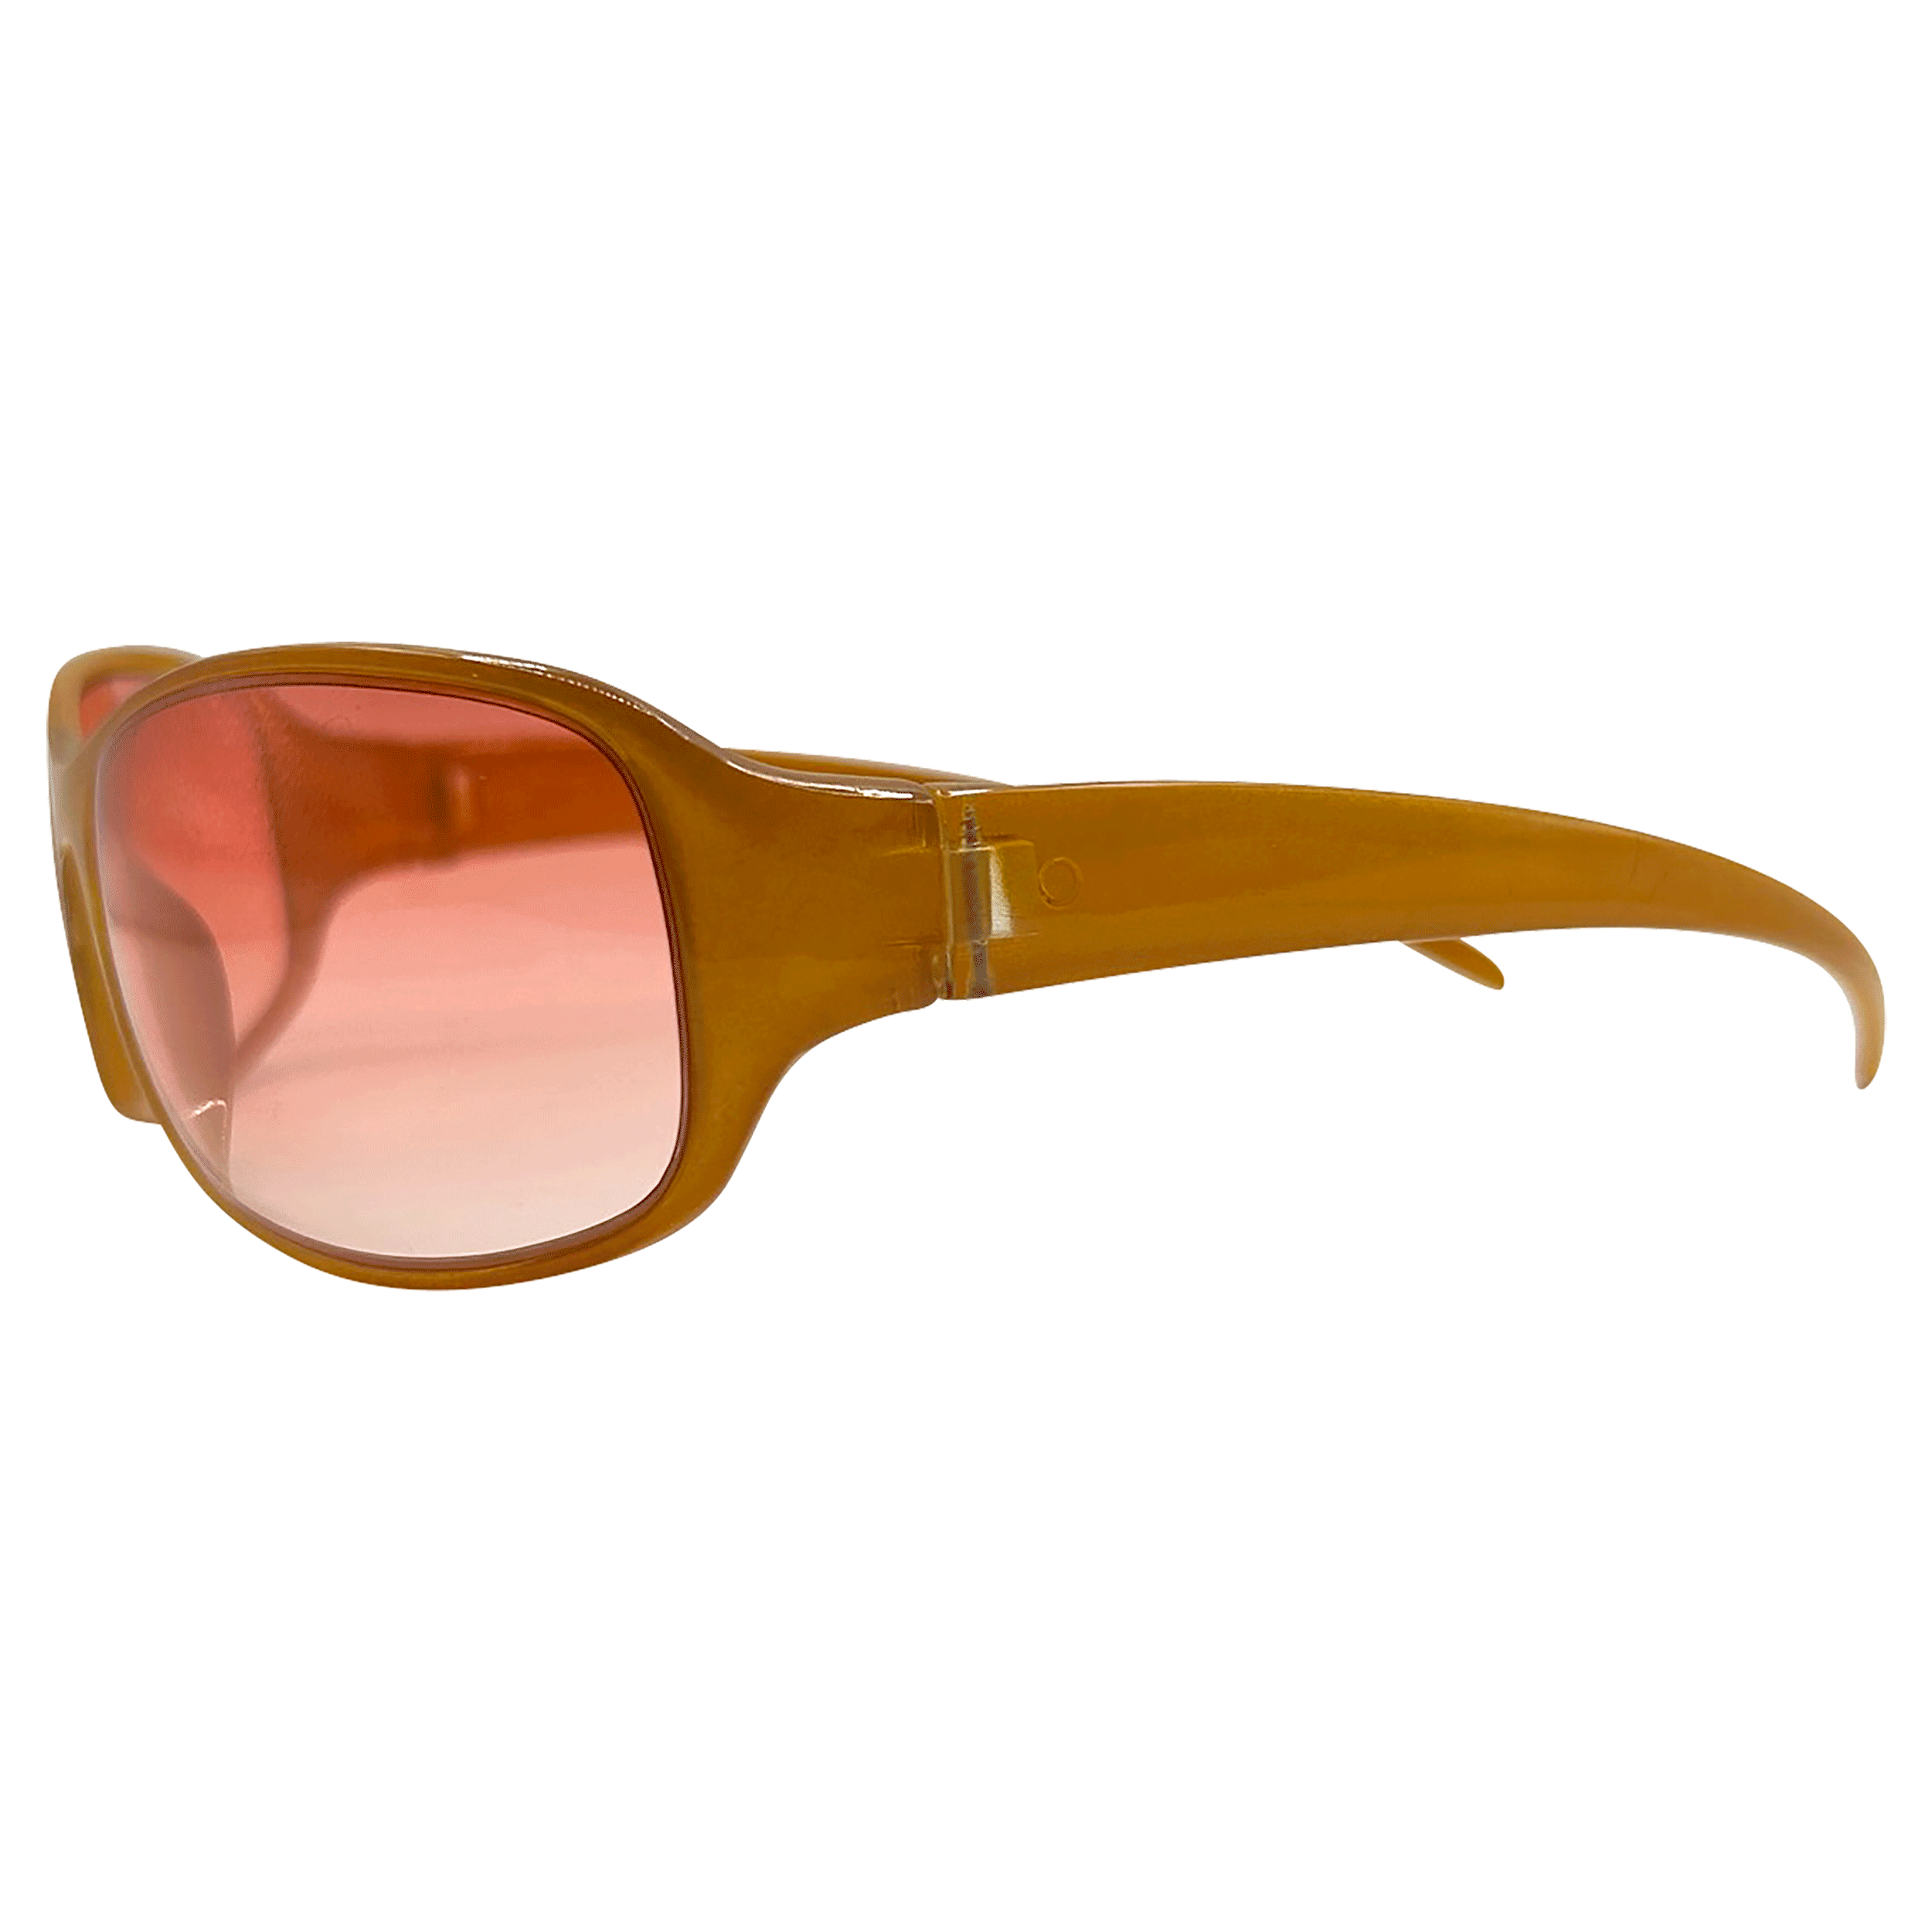 CARNATION Colorful Shield Sunglasses